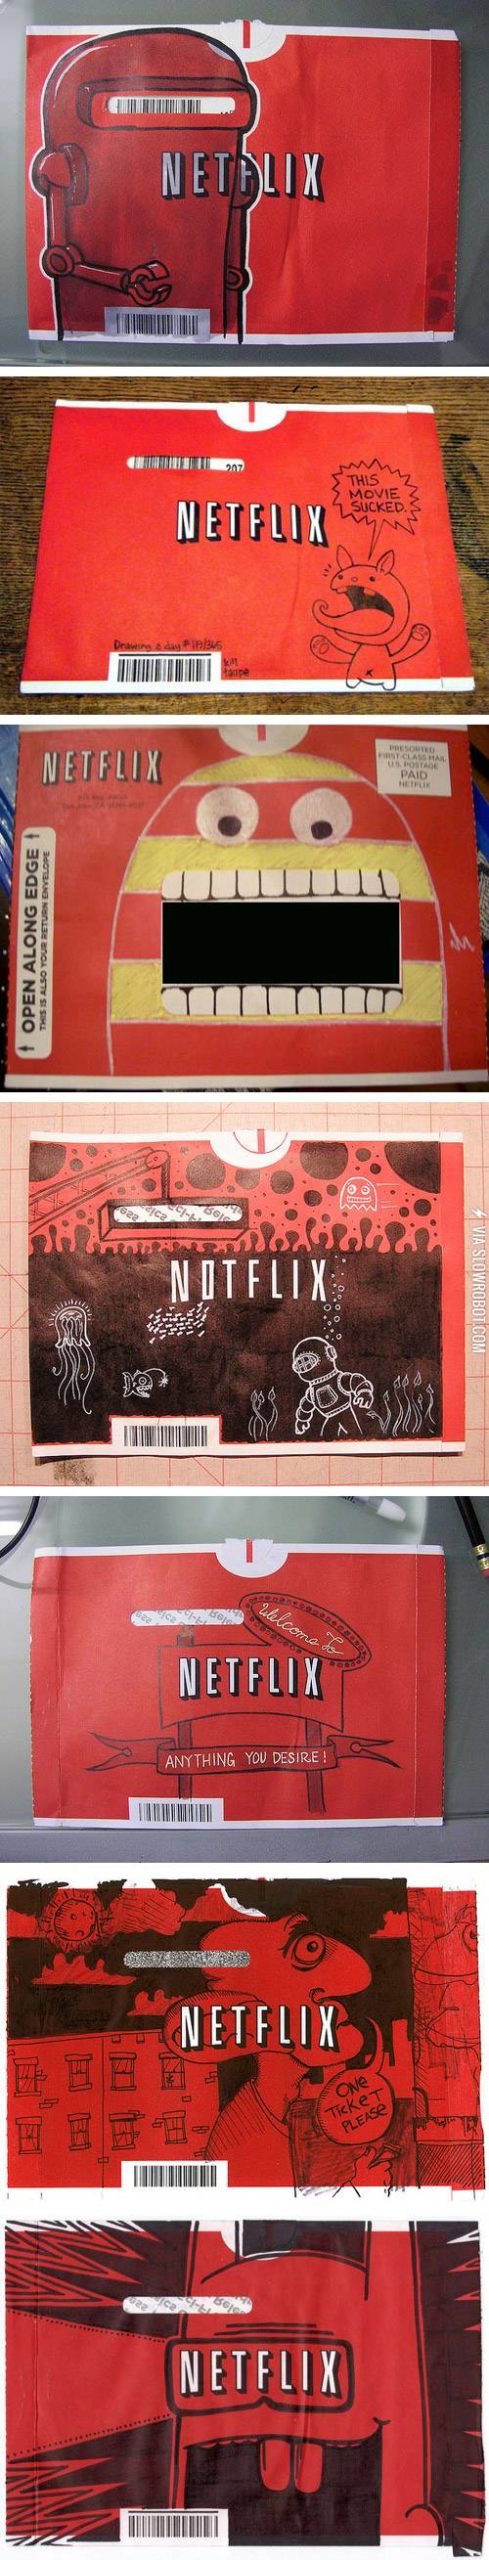 Netflix+envelope+doodles.